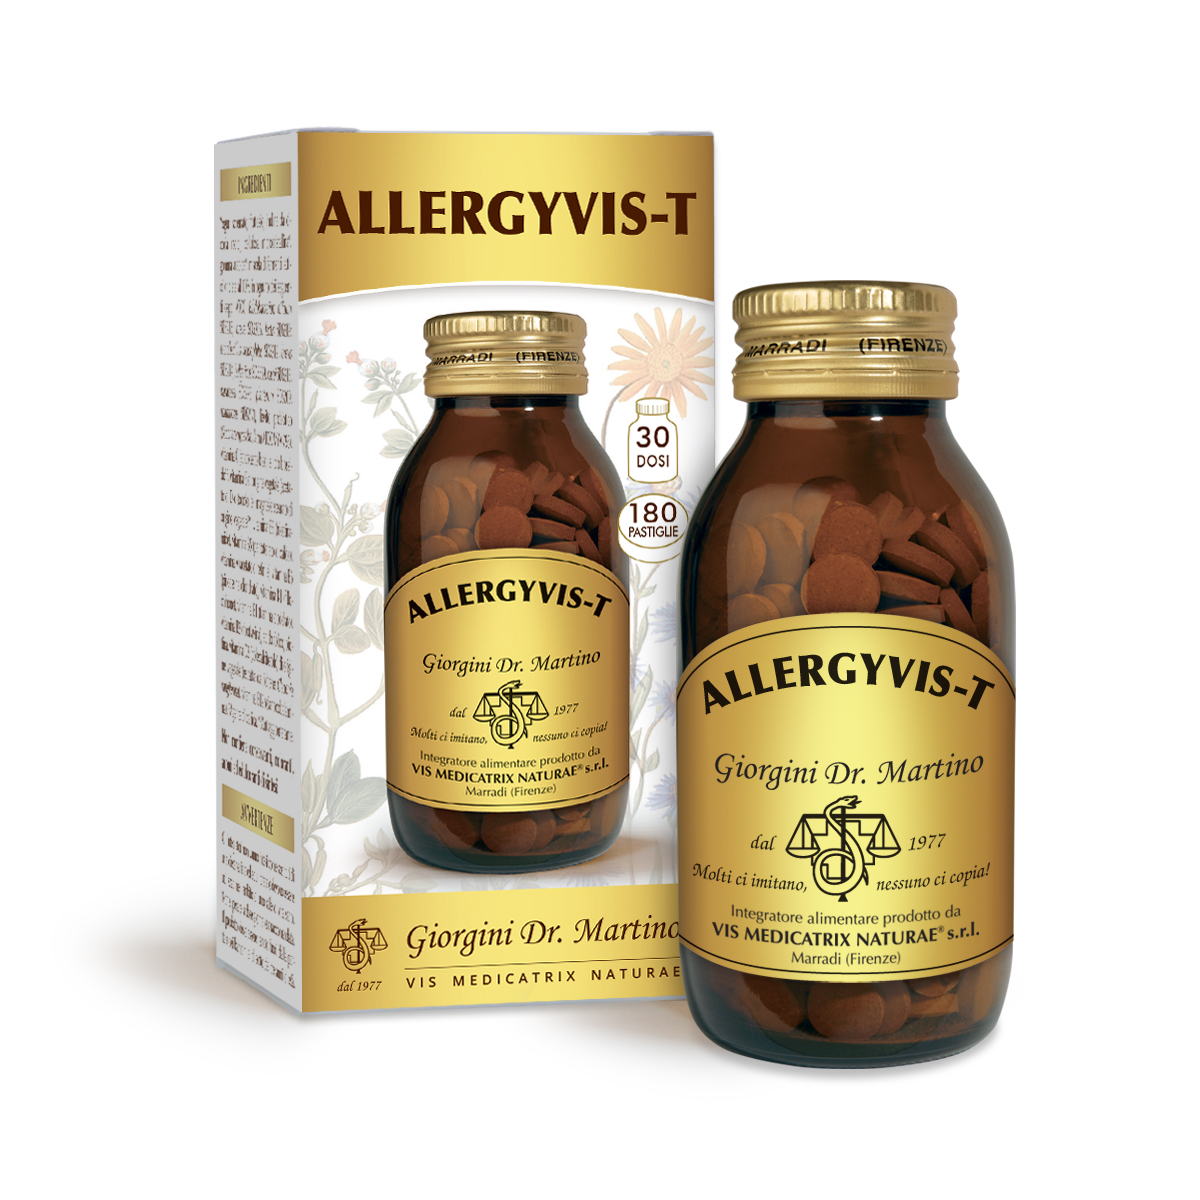 ALLERGYVIS-T 90 g - 180 pastiglie da 500 mg